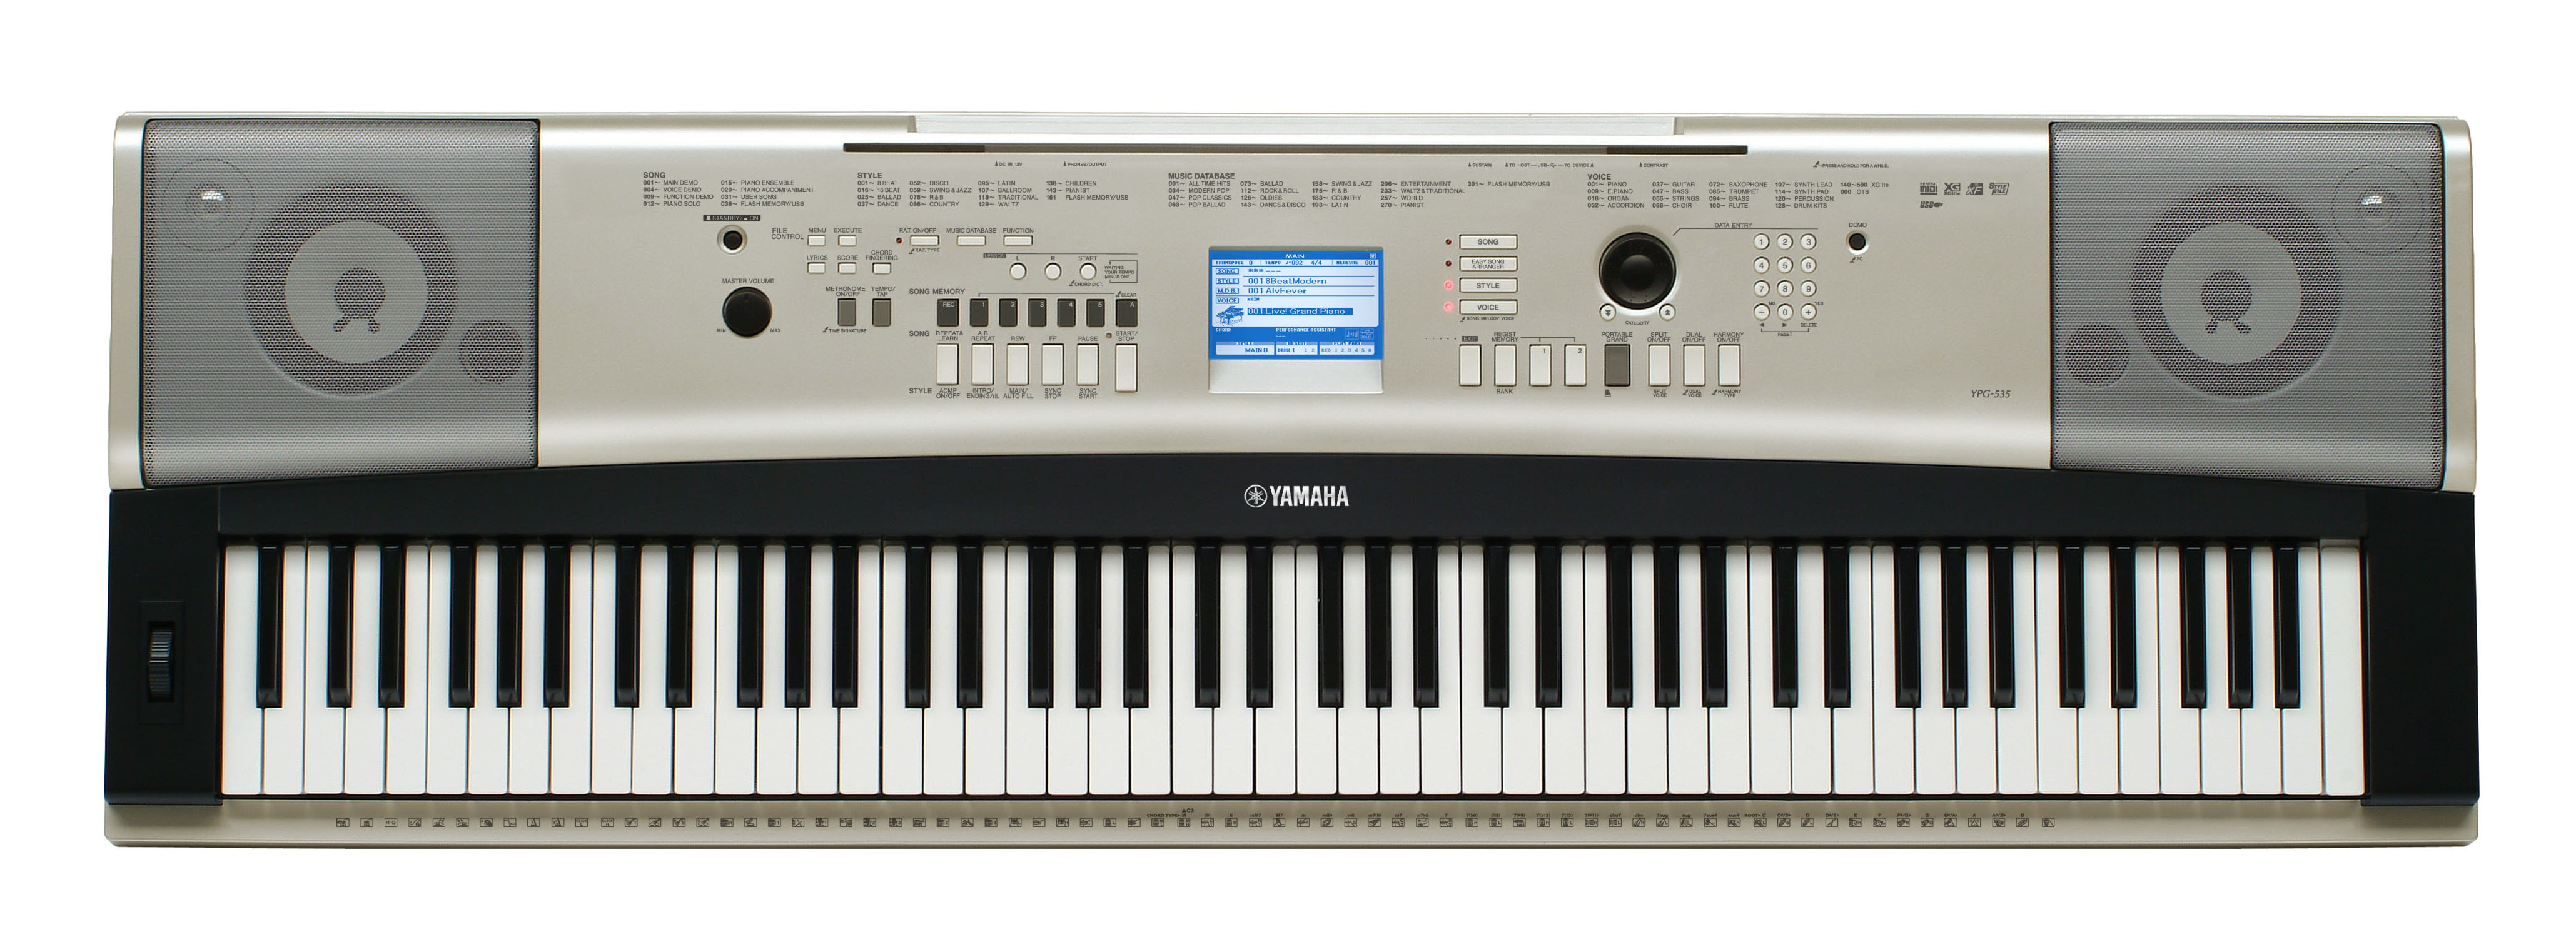 Yamaha Yamaha YPG-535 Portable Grand Keyboard, 88-Key